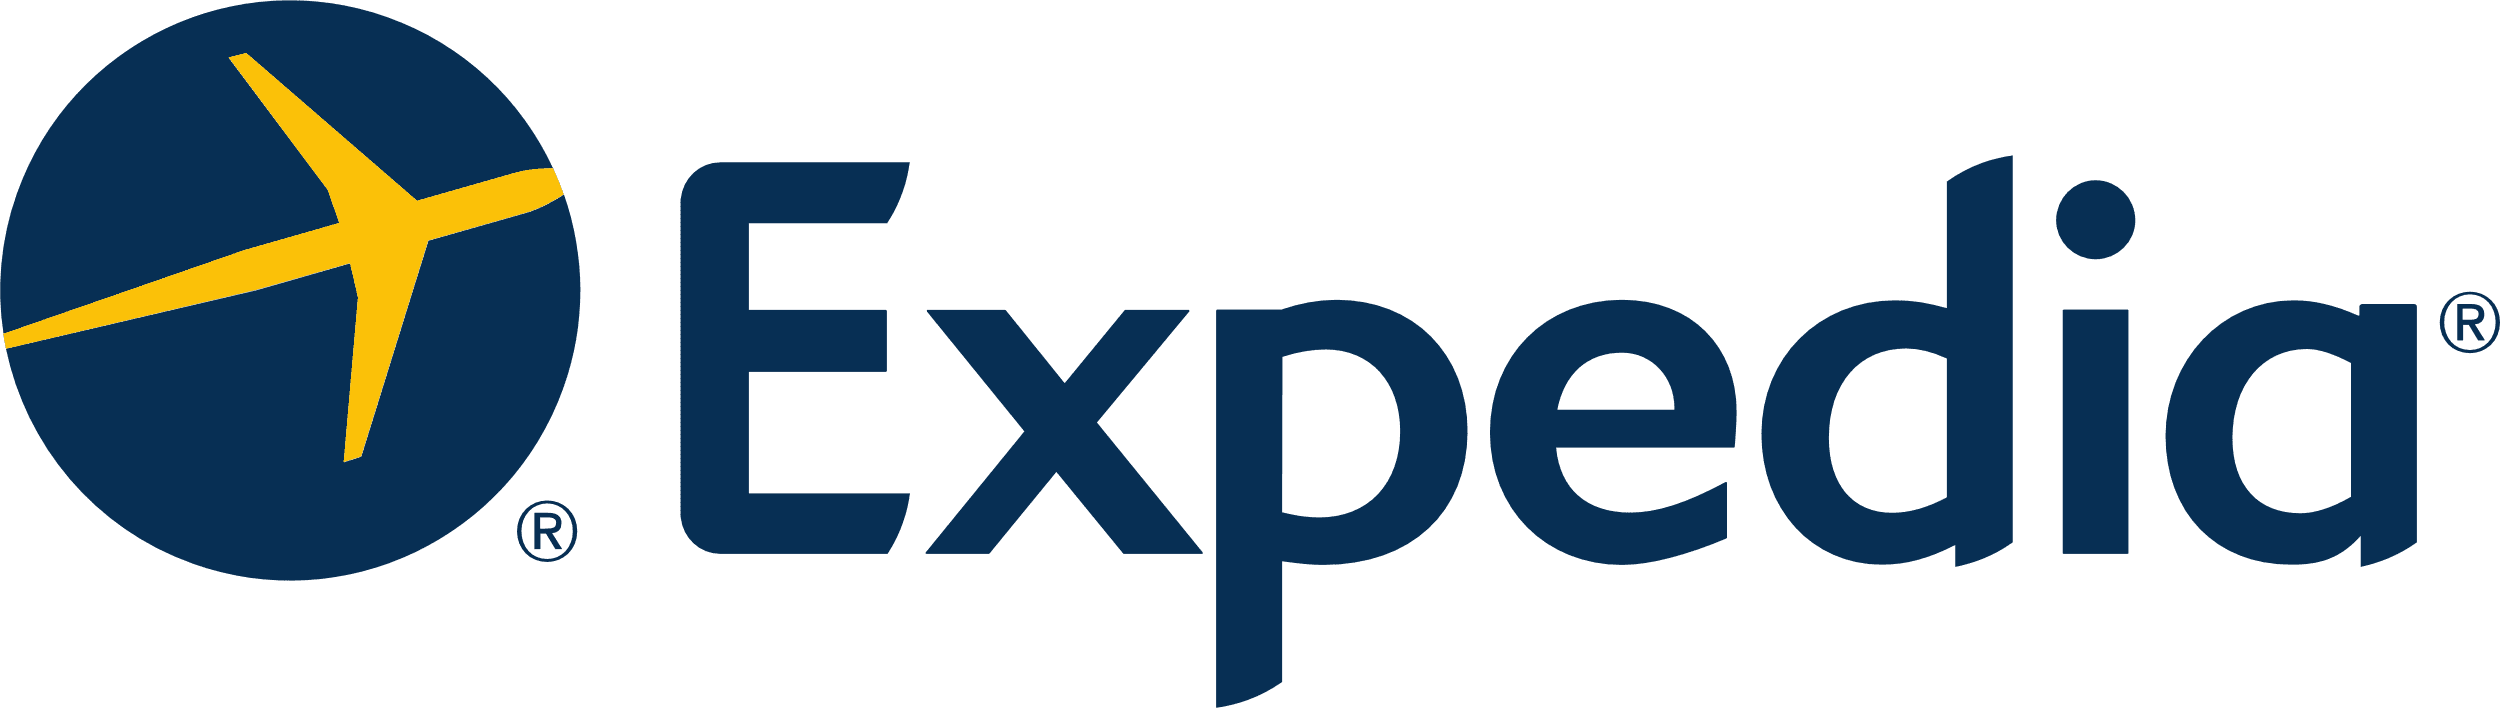 Expedia-logo.png